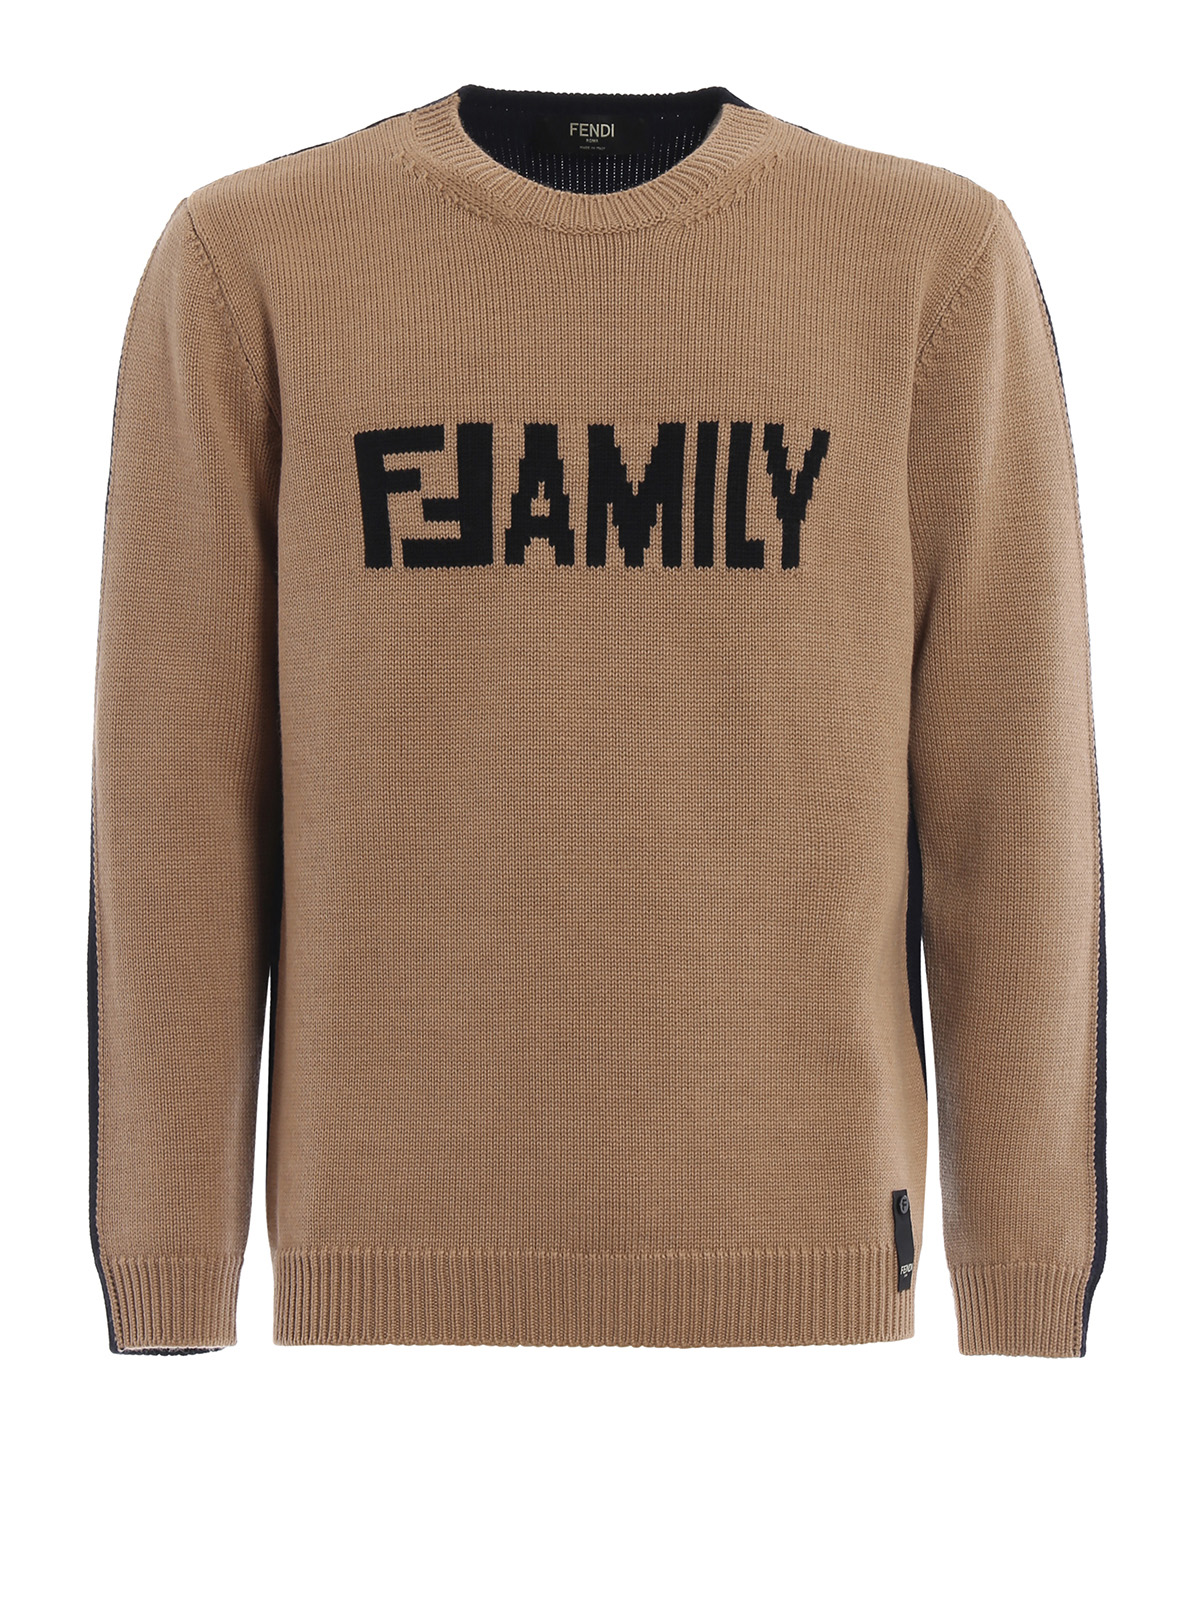 fendi sweater family